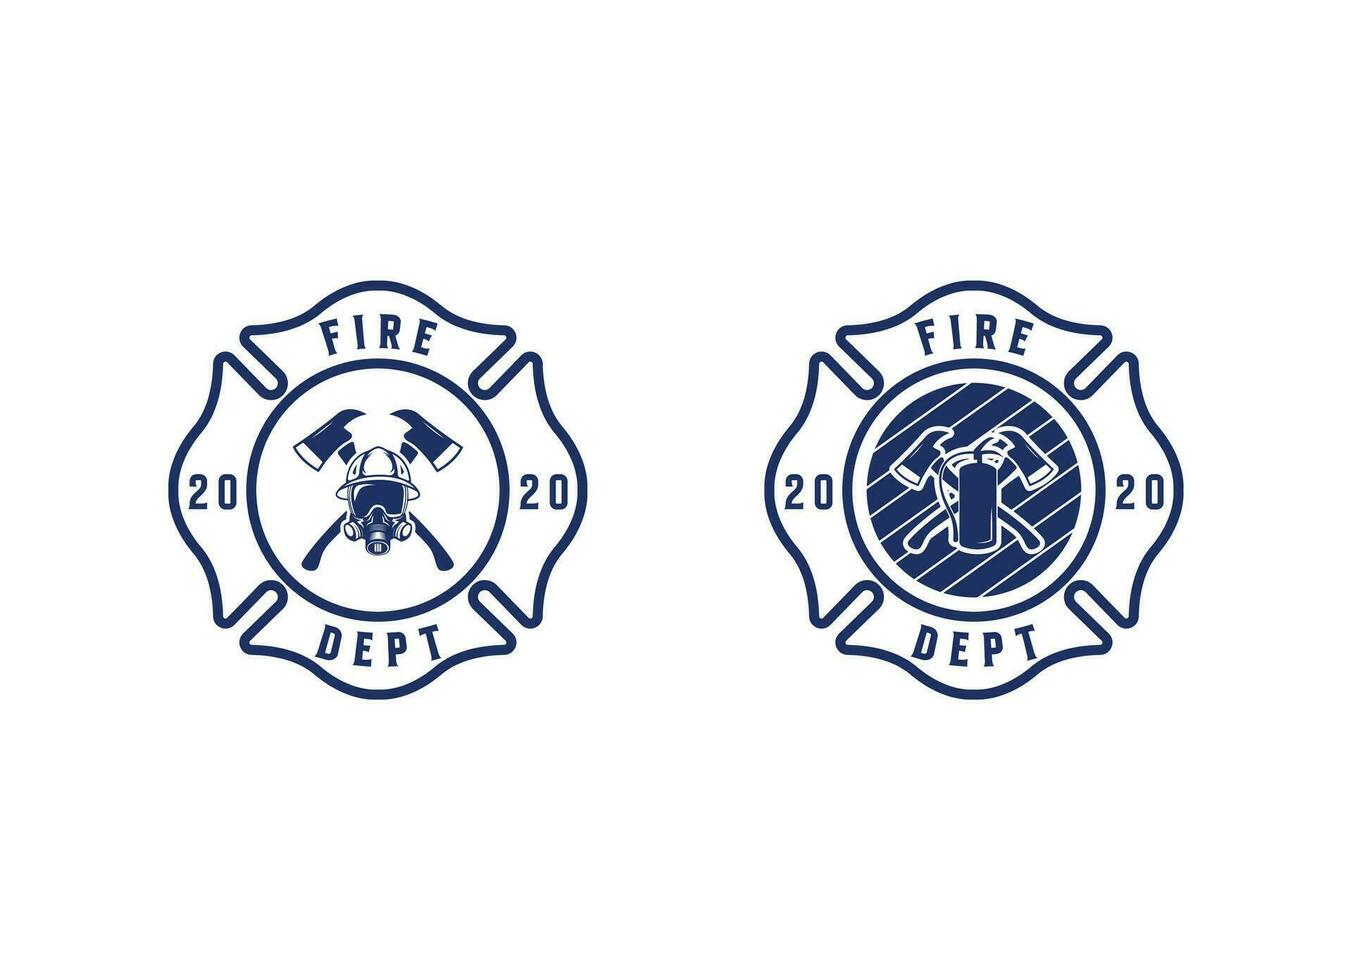 Firefighter emblem logo design. in a classic concept vector